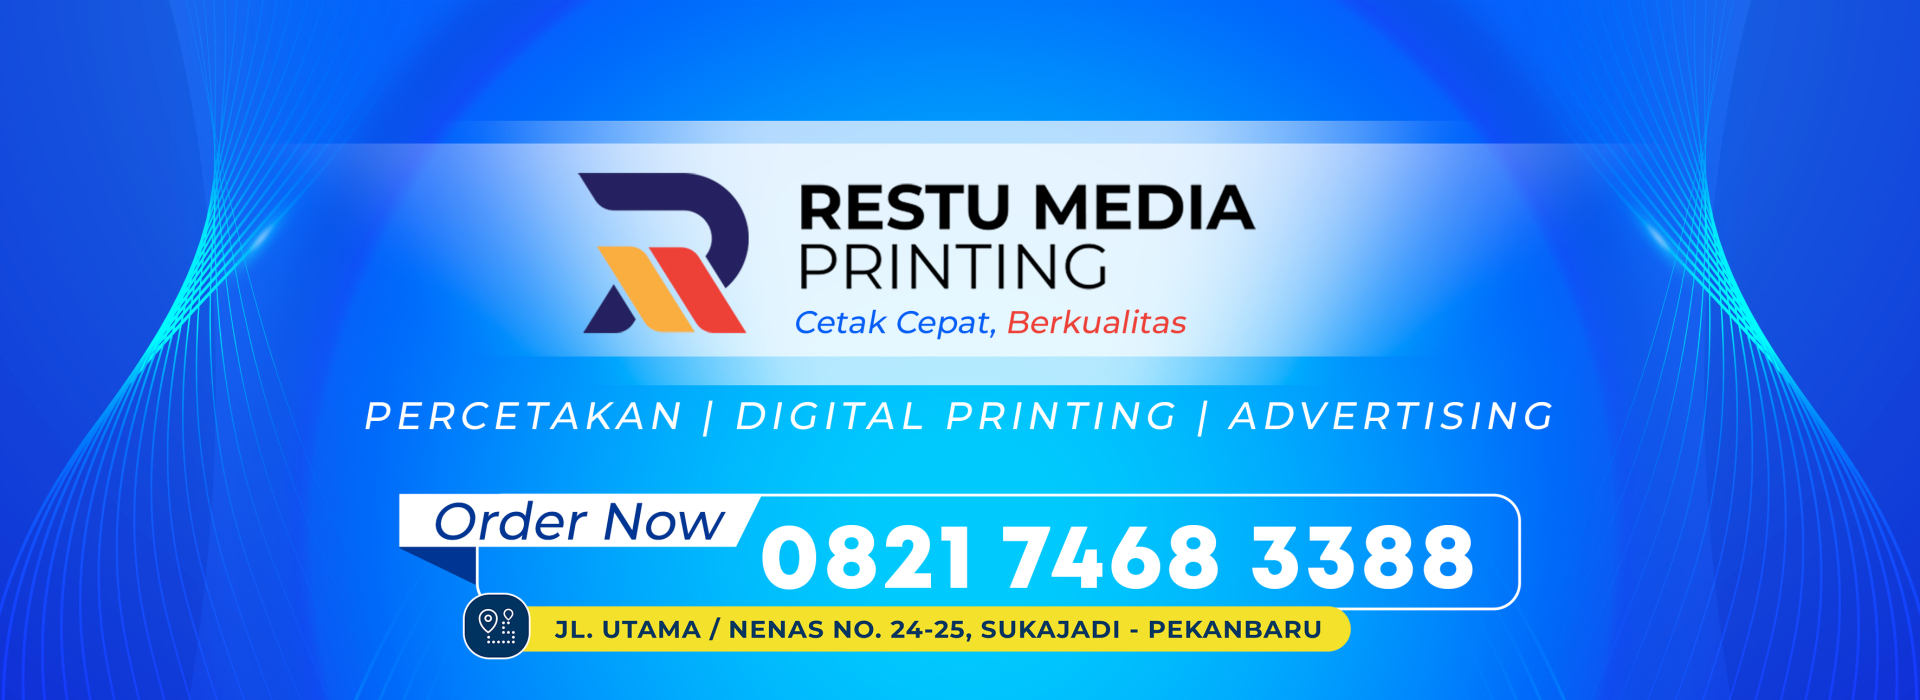 Restu Media Printing